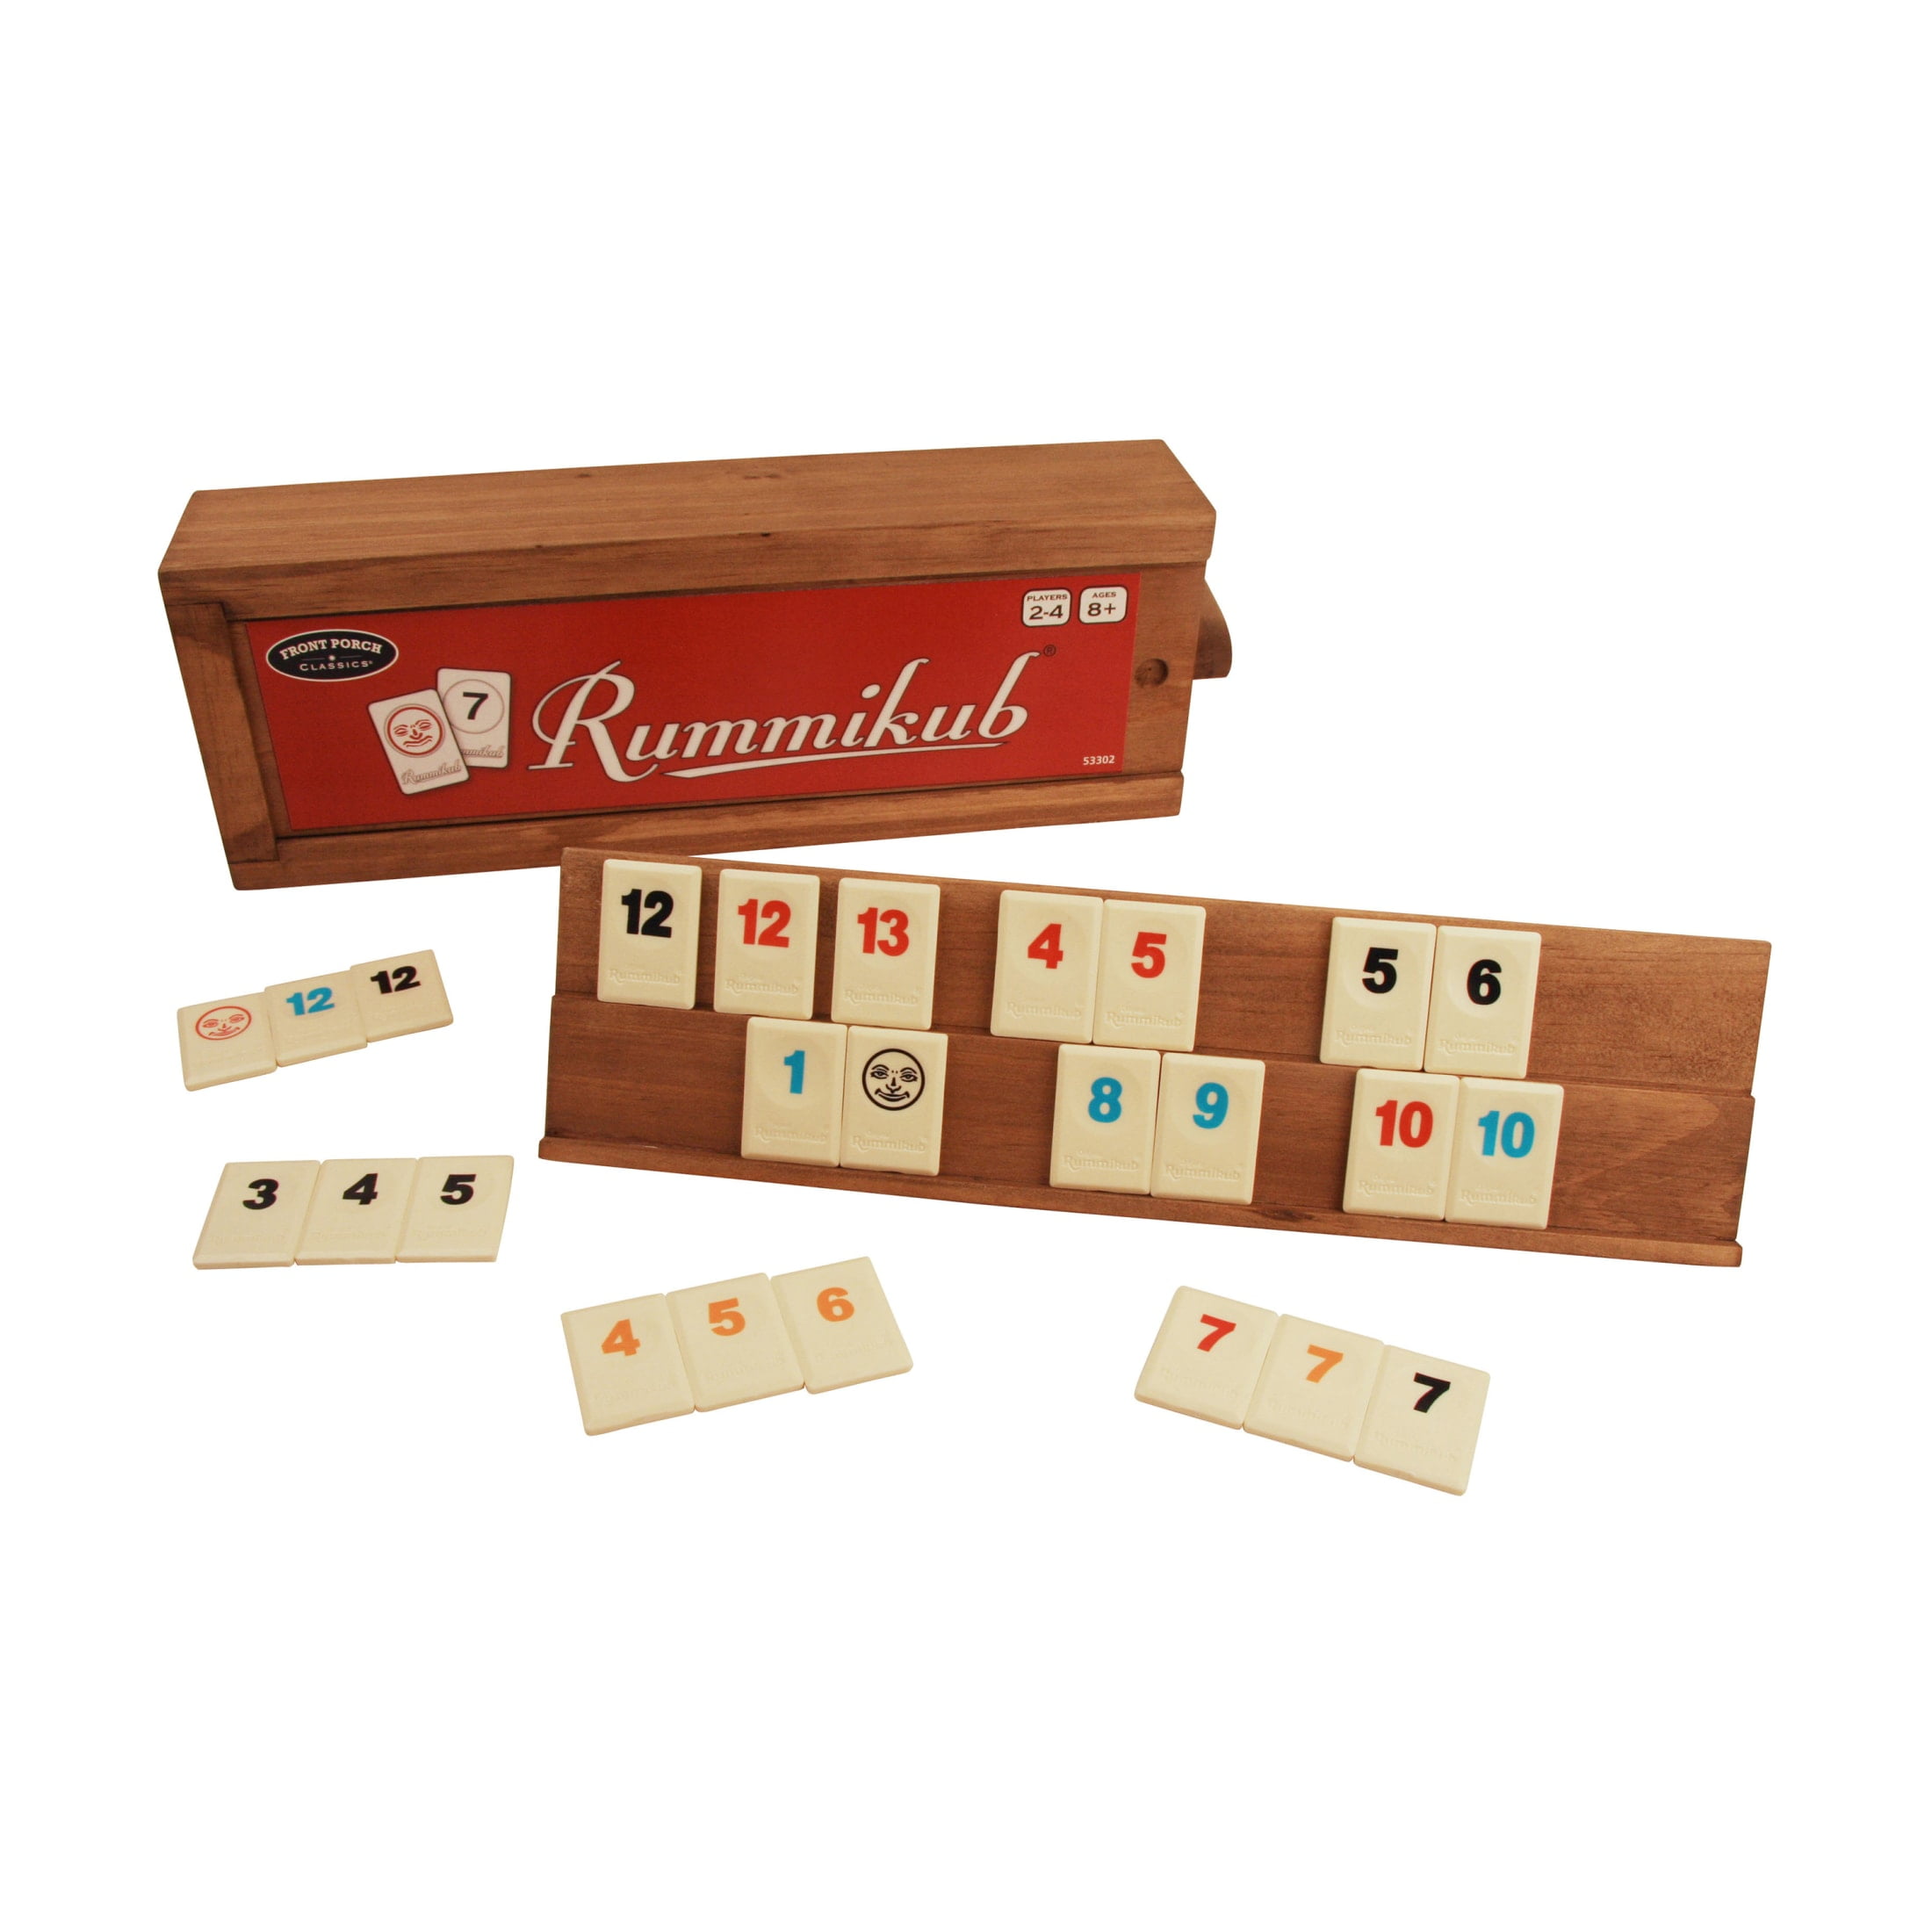 Pressman Rummikub Fast Moving Rummy Tile Game for sale online 